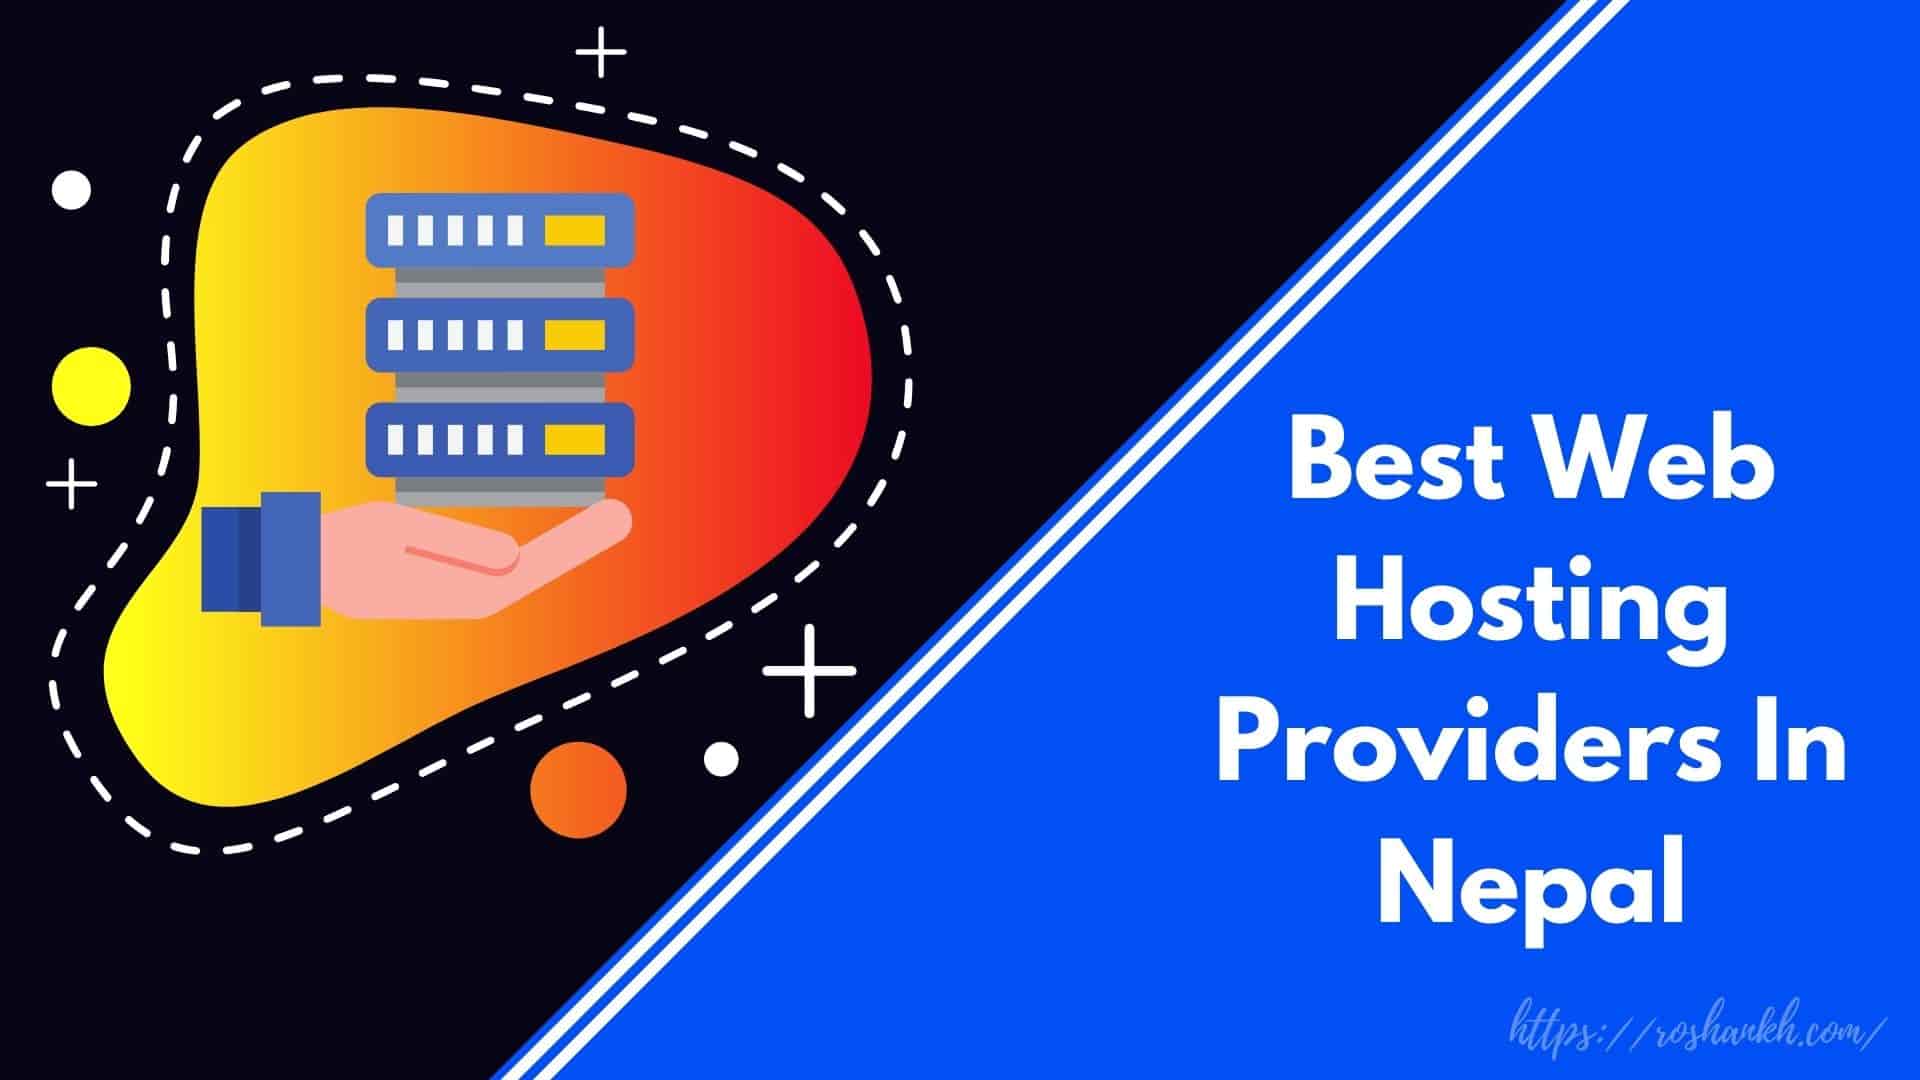 Best Web Hosting Providers In Nepal